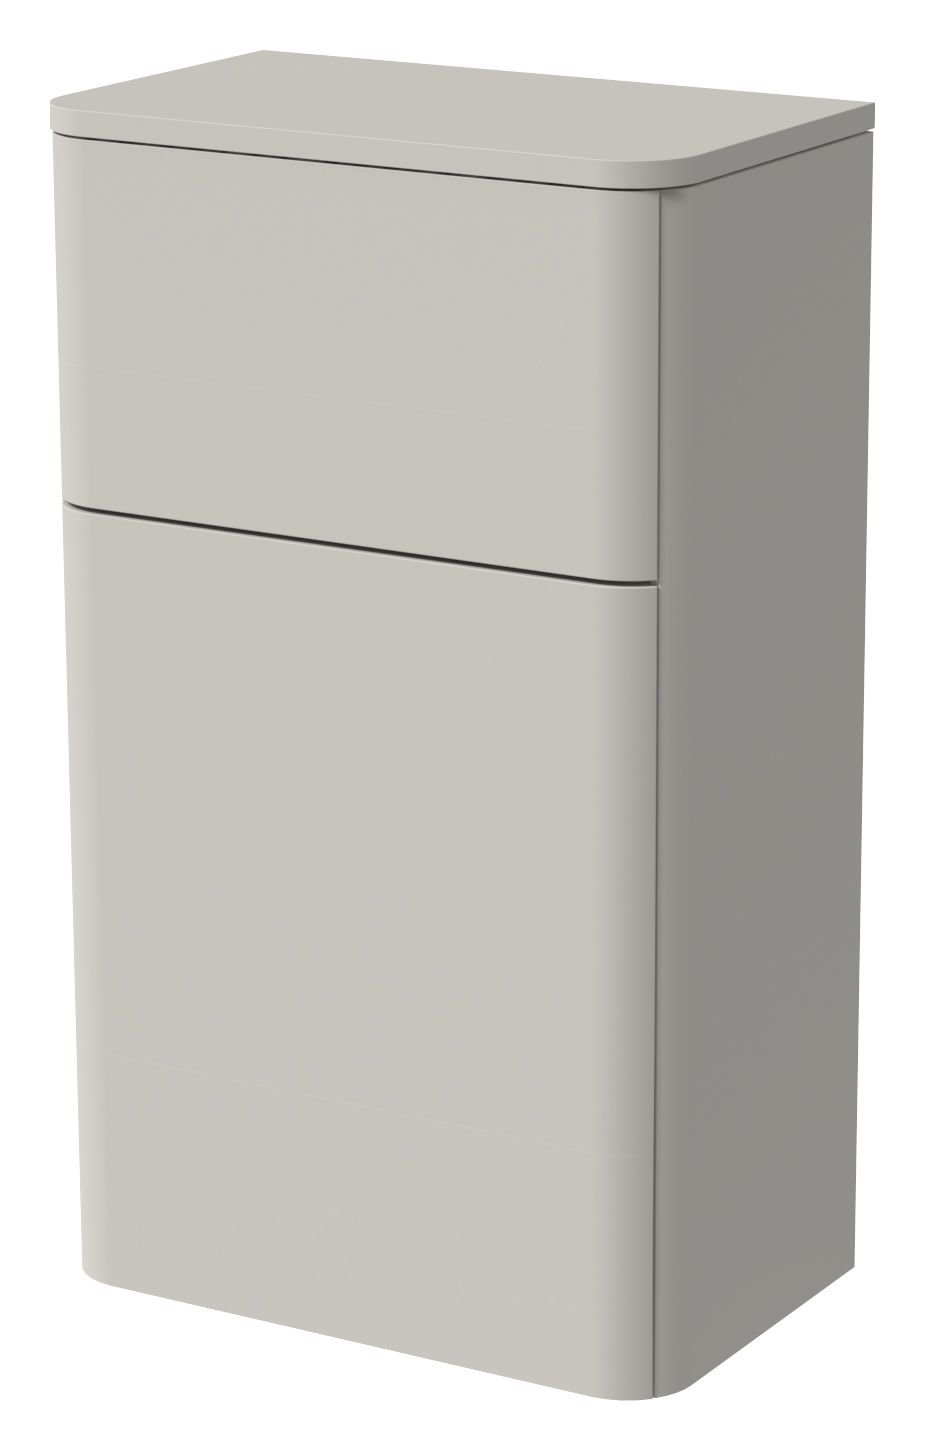 Wickes Malmo Light Grey Freestanding Toilet Unit - 832 x 500mm